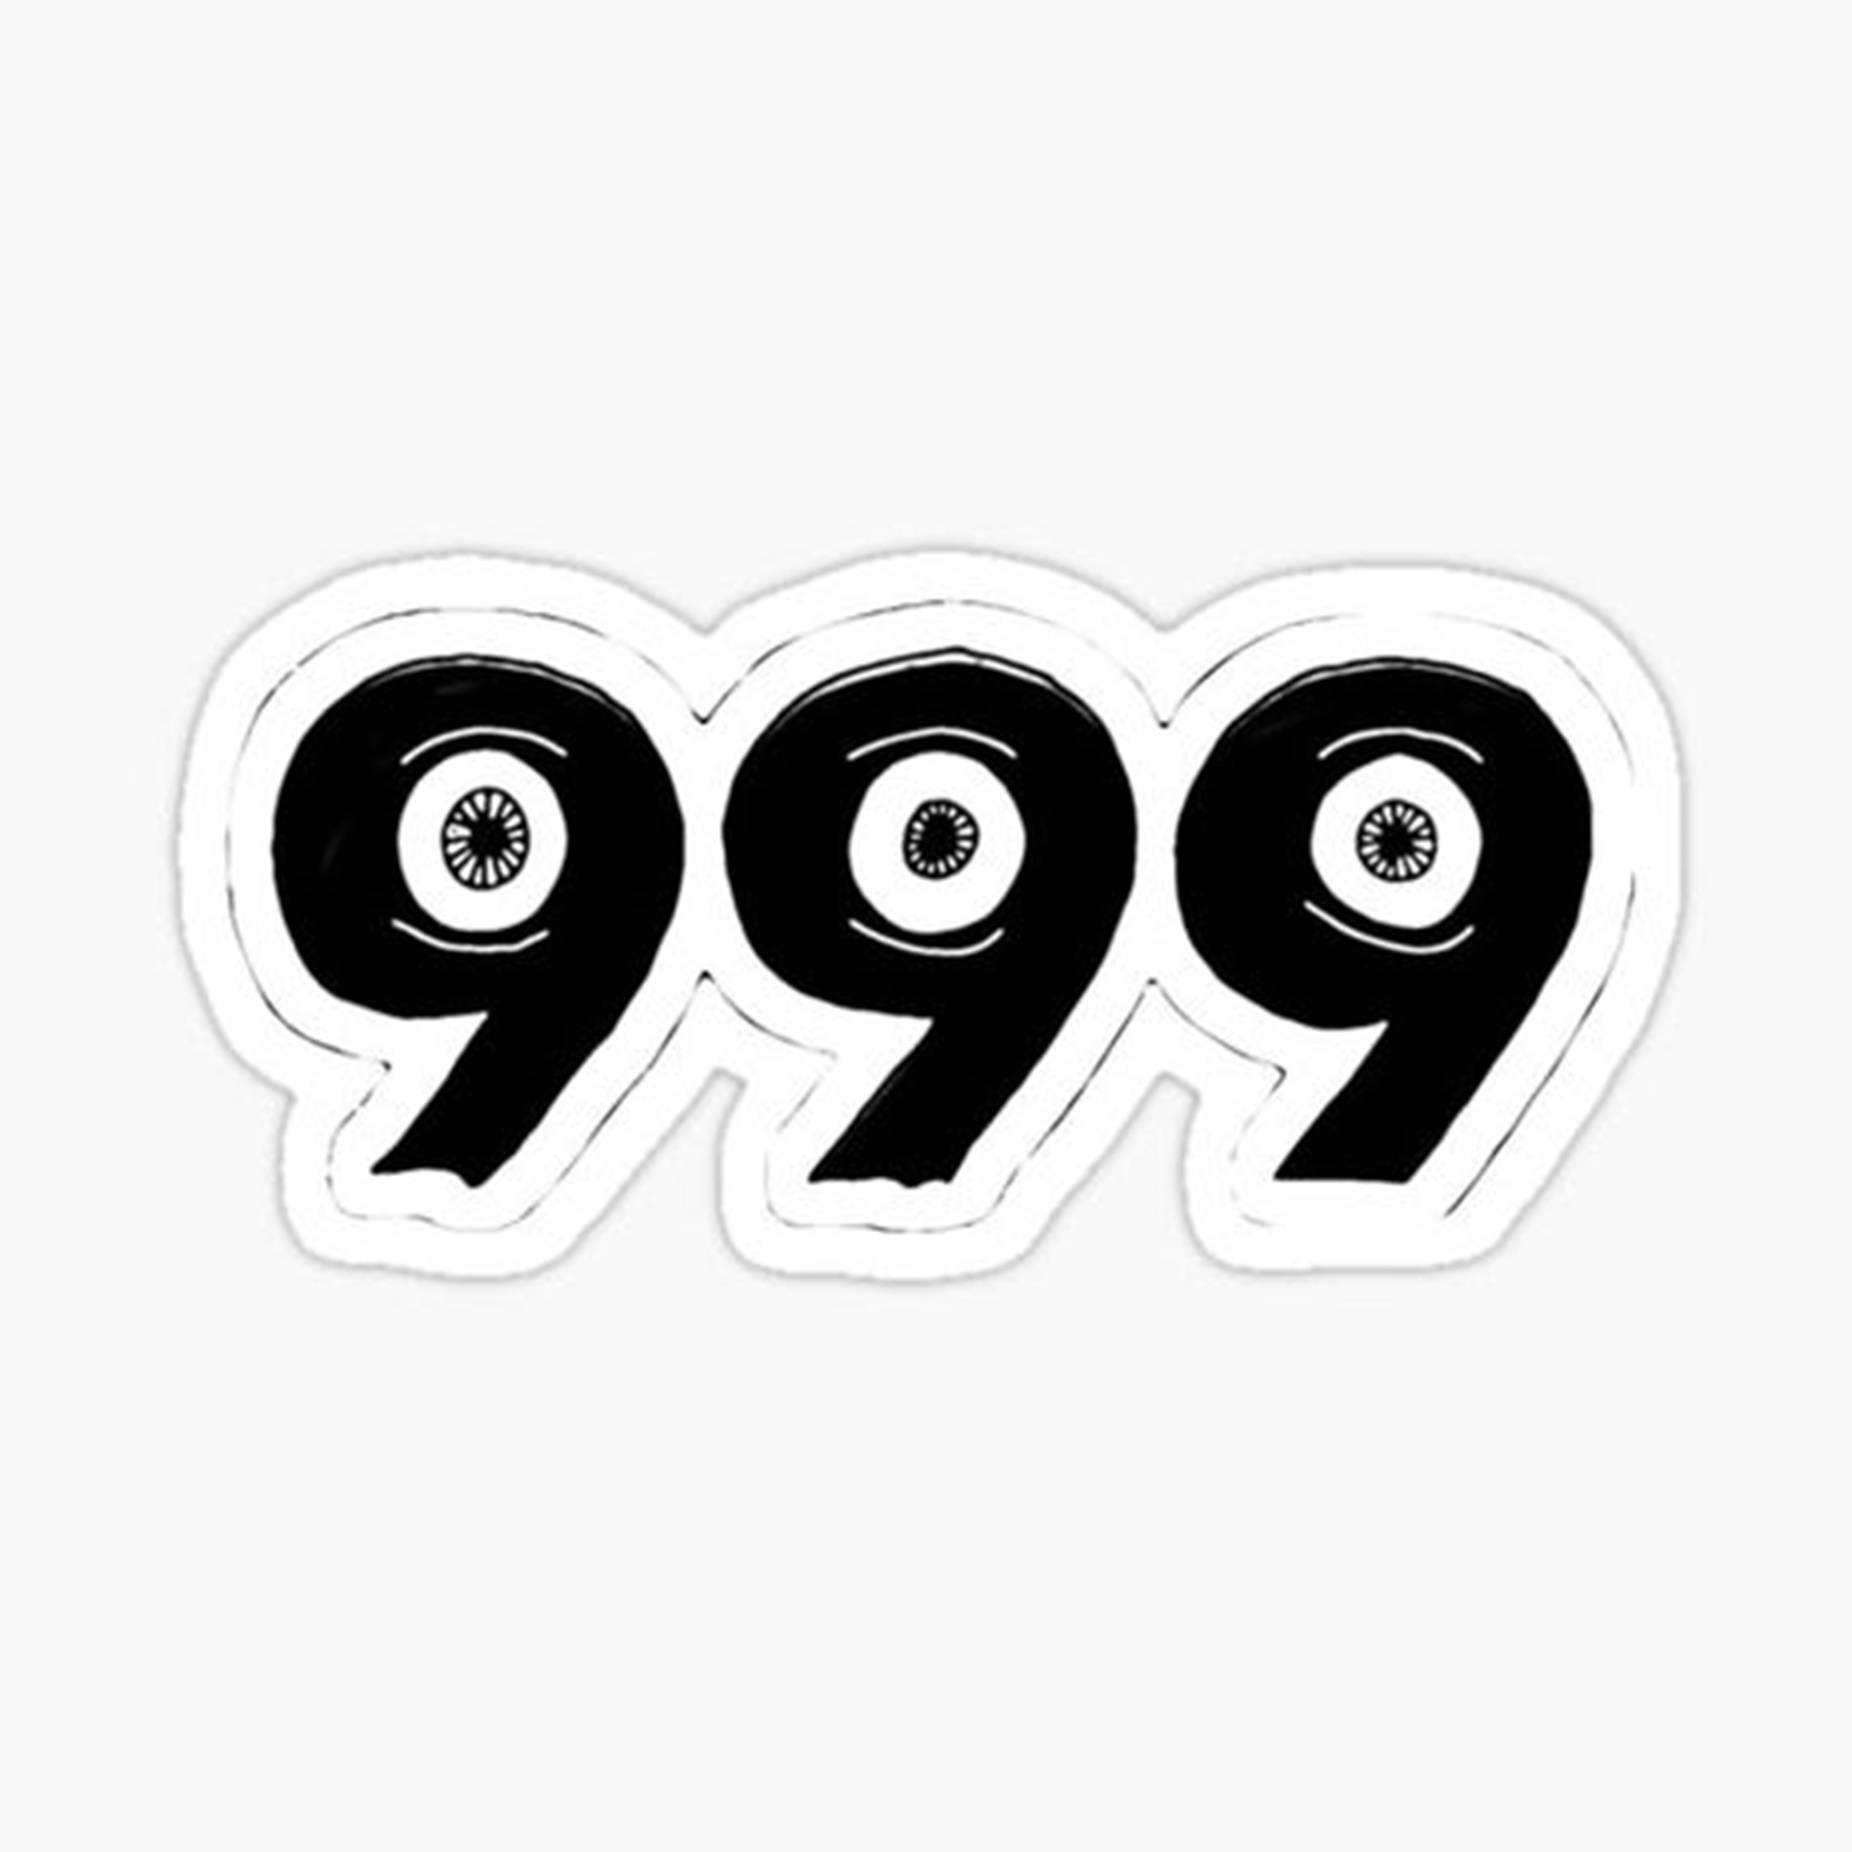 Black 999 Juice WRLD Logo Wallpaper